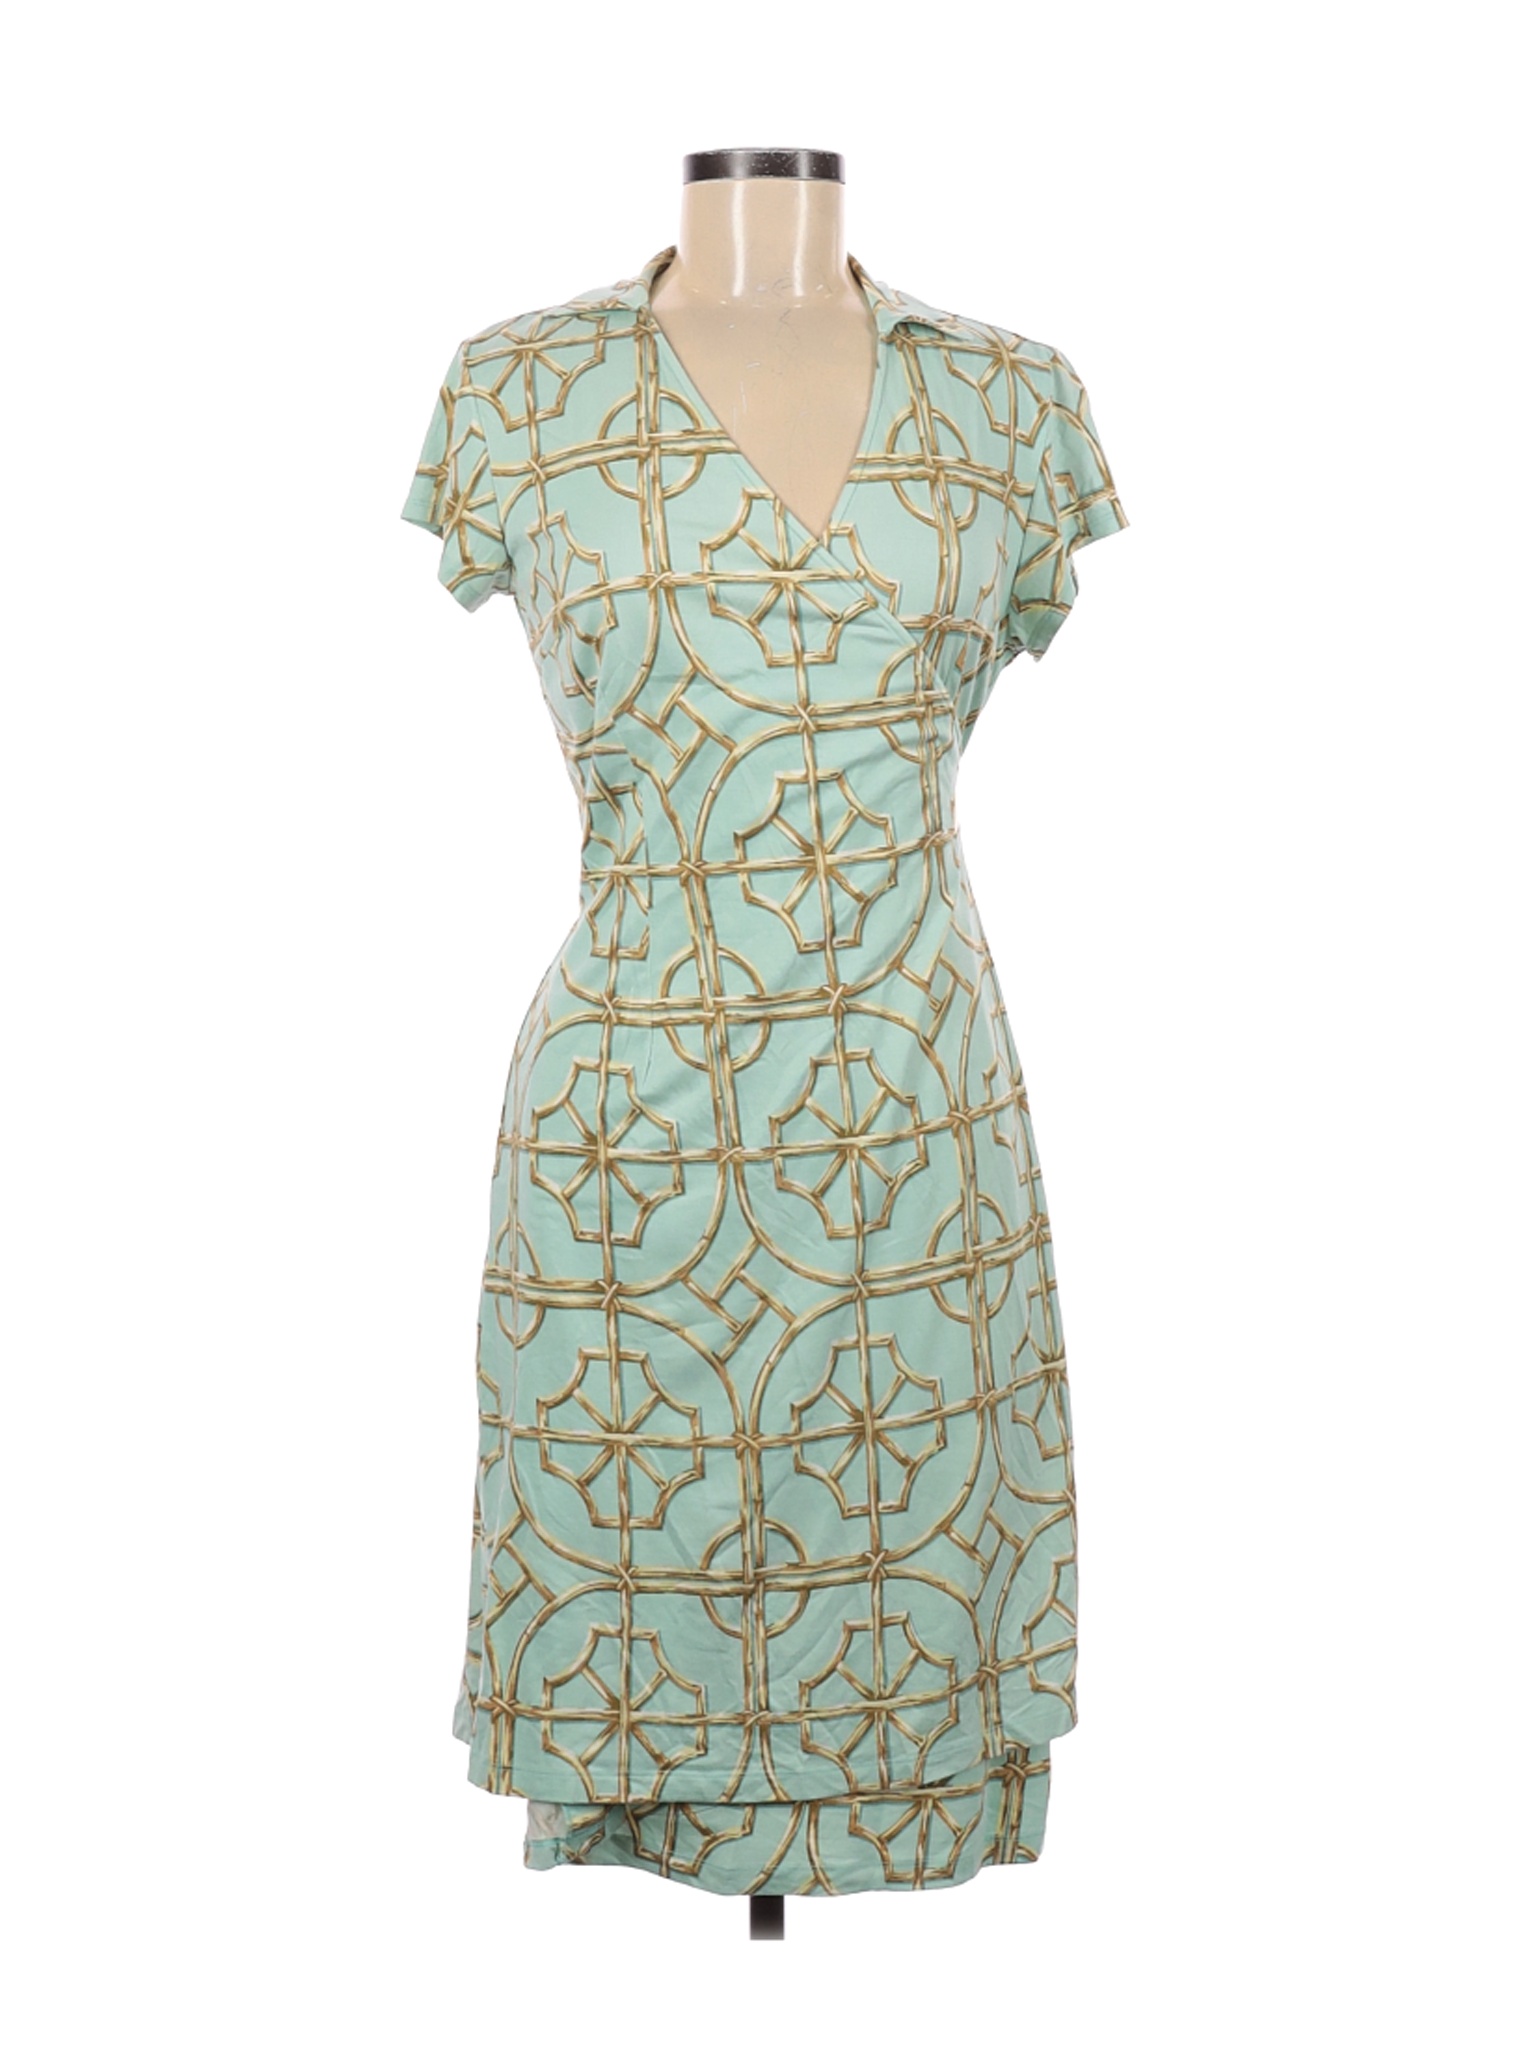 J. McLaughlin Women Green Casual Dress S | eBay